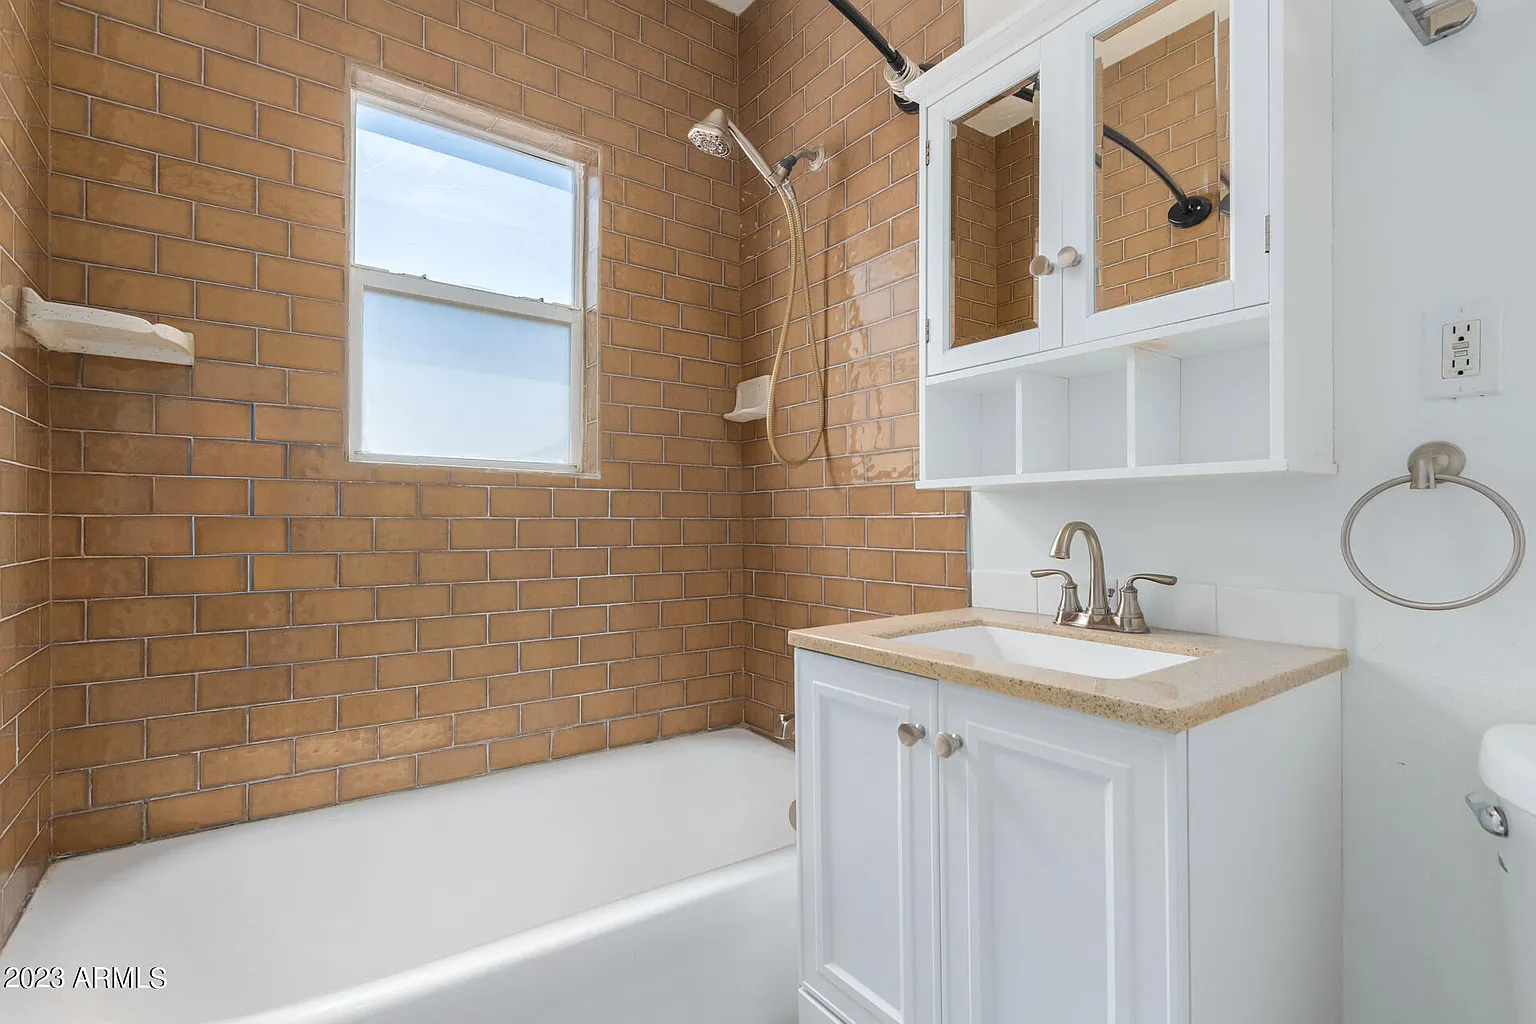 A brick bathroom. 